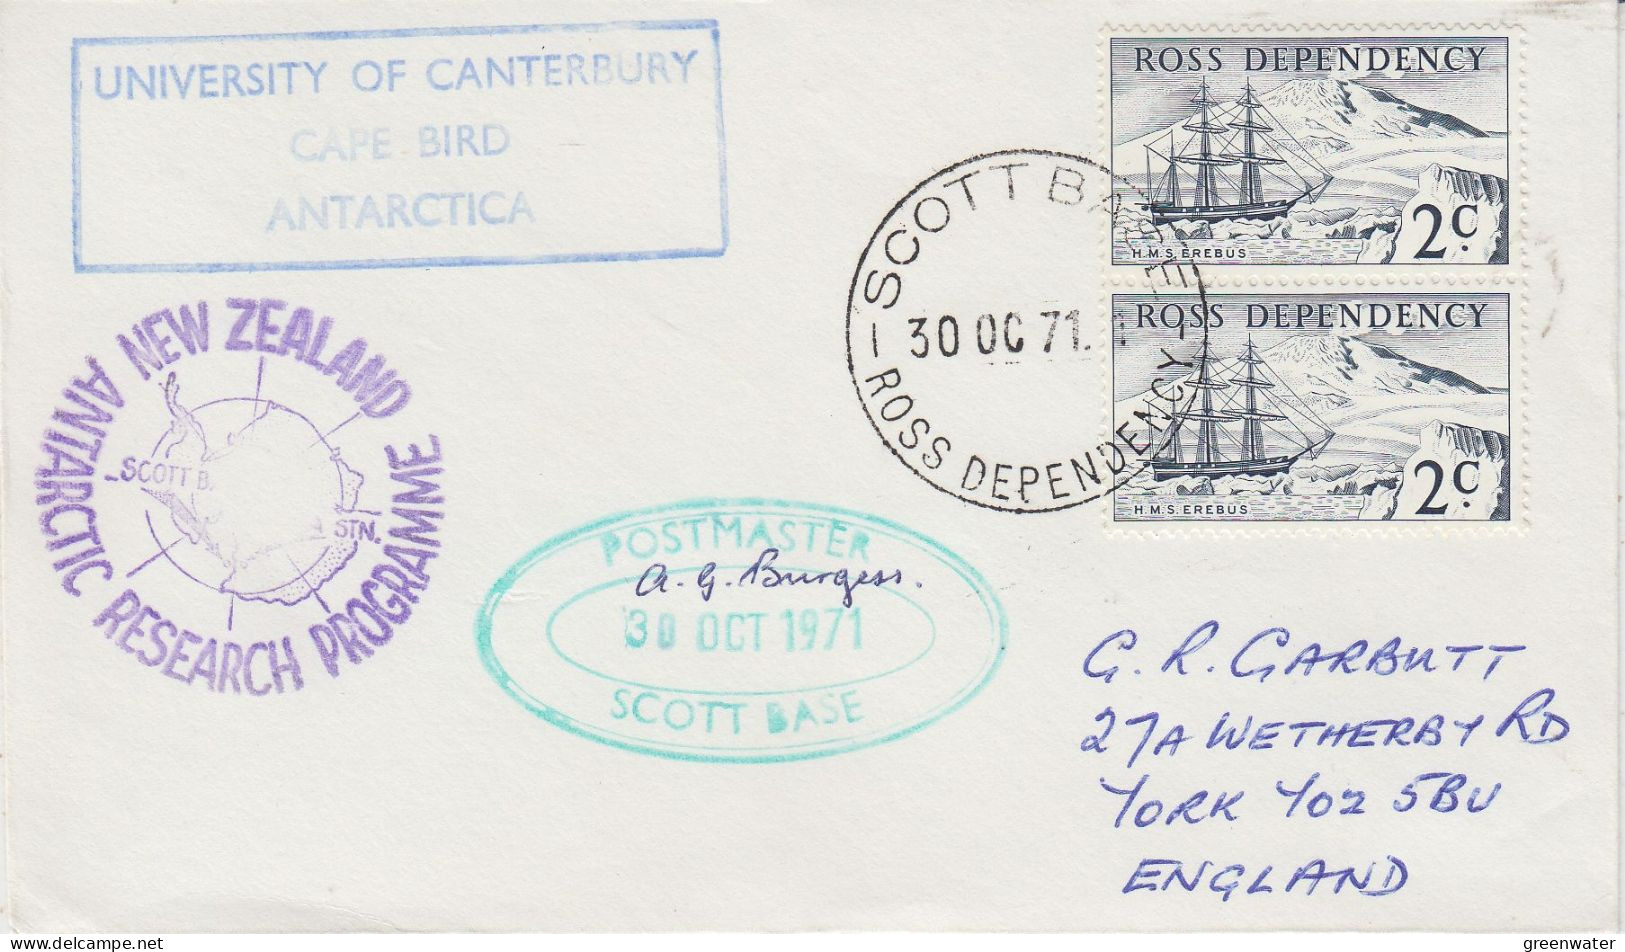 Ross Dependency University Of Canterbury Cape Bird  Signature Postmaster Scott Base  Ca Scott Base 30 OCT 1971 (SO192) - Forschungsstationen